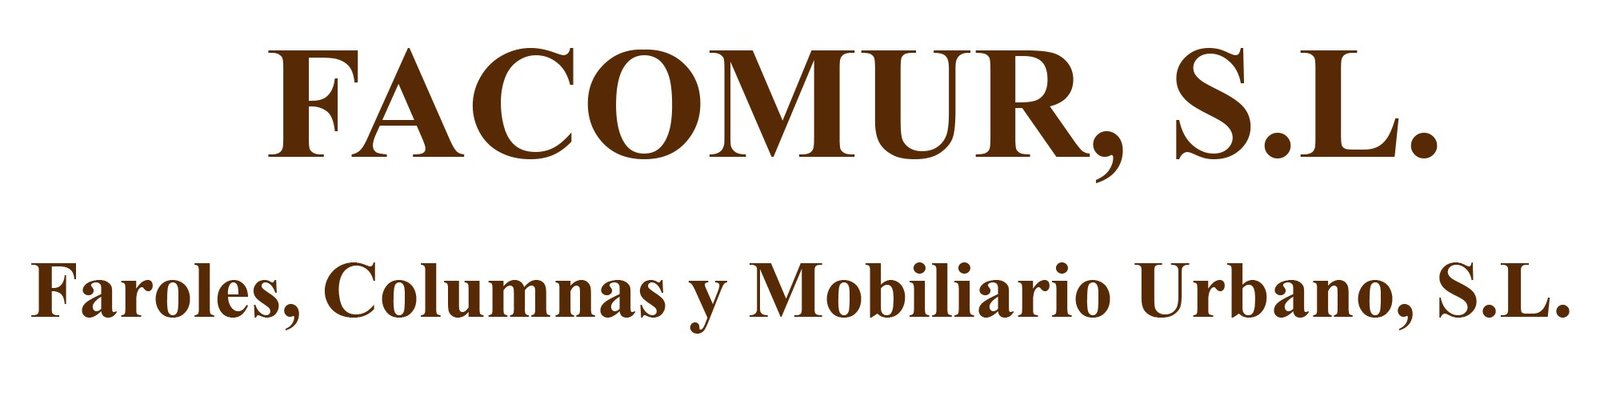 Faroles, Columnas y Mobiliario Urbano, S.L. - Facomur, S.L.